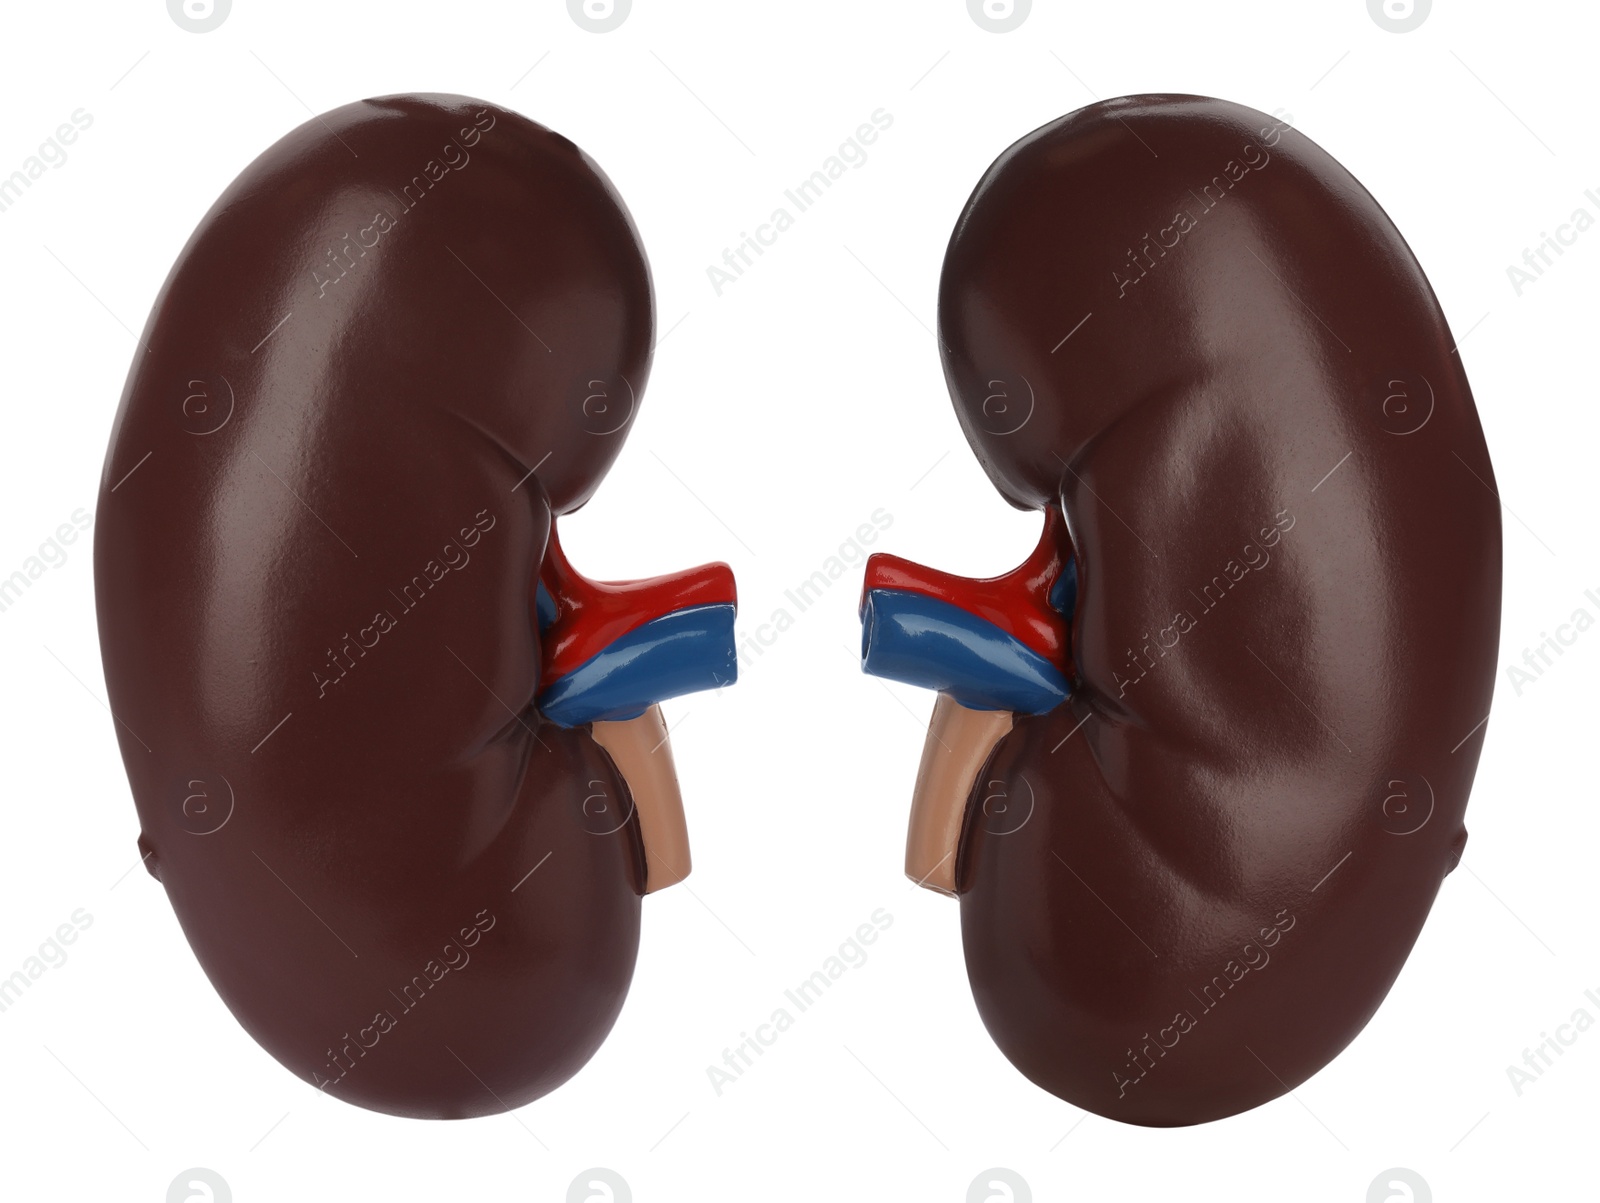 Image of Educational plastic kidney models on white background